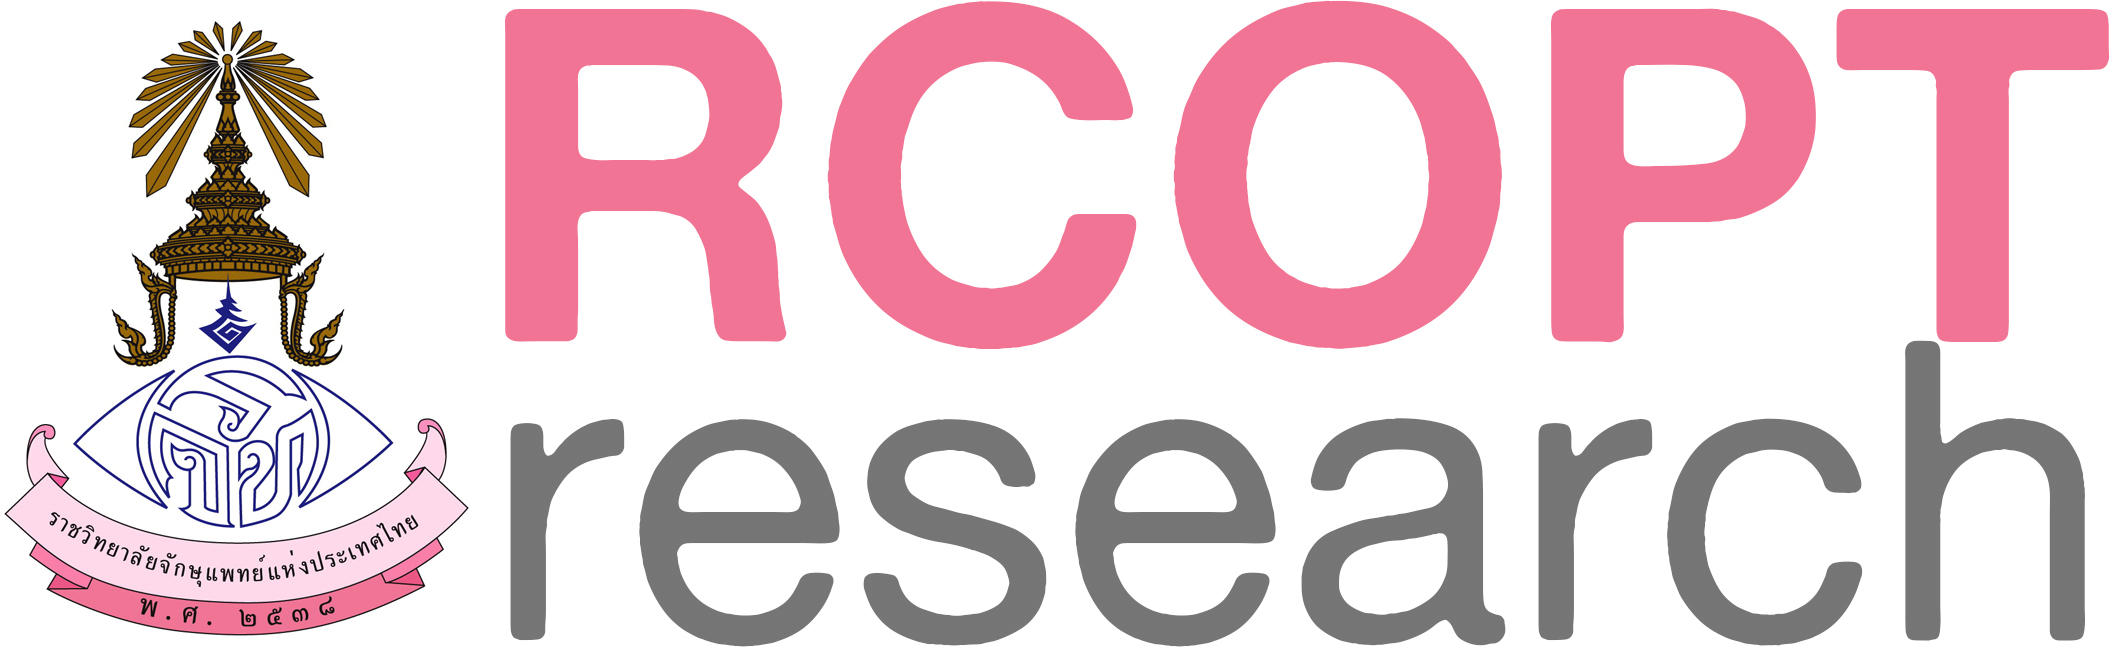 2019RCOPT research logo1.jpg